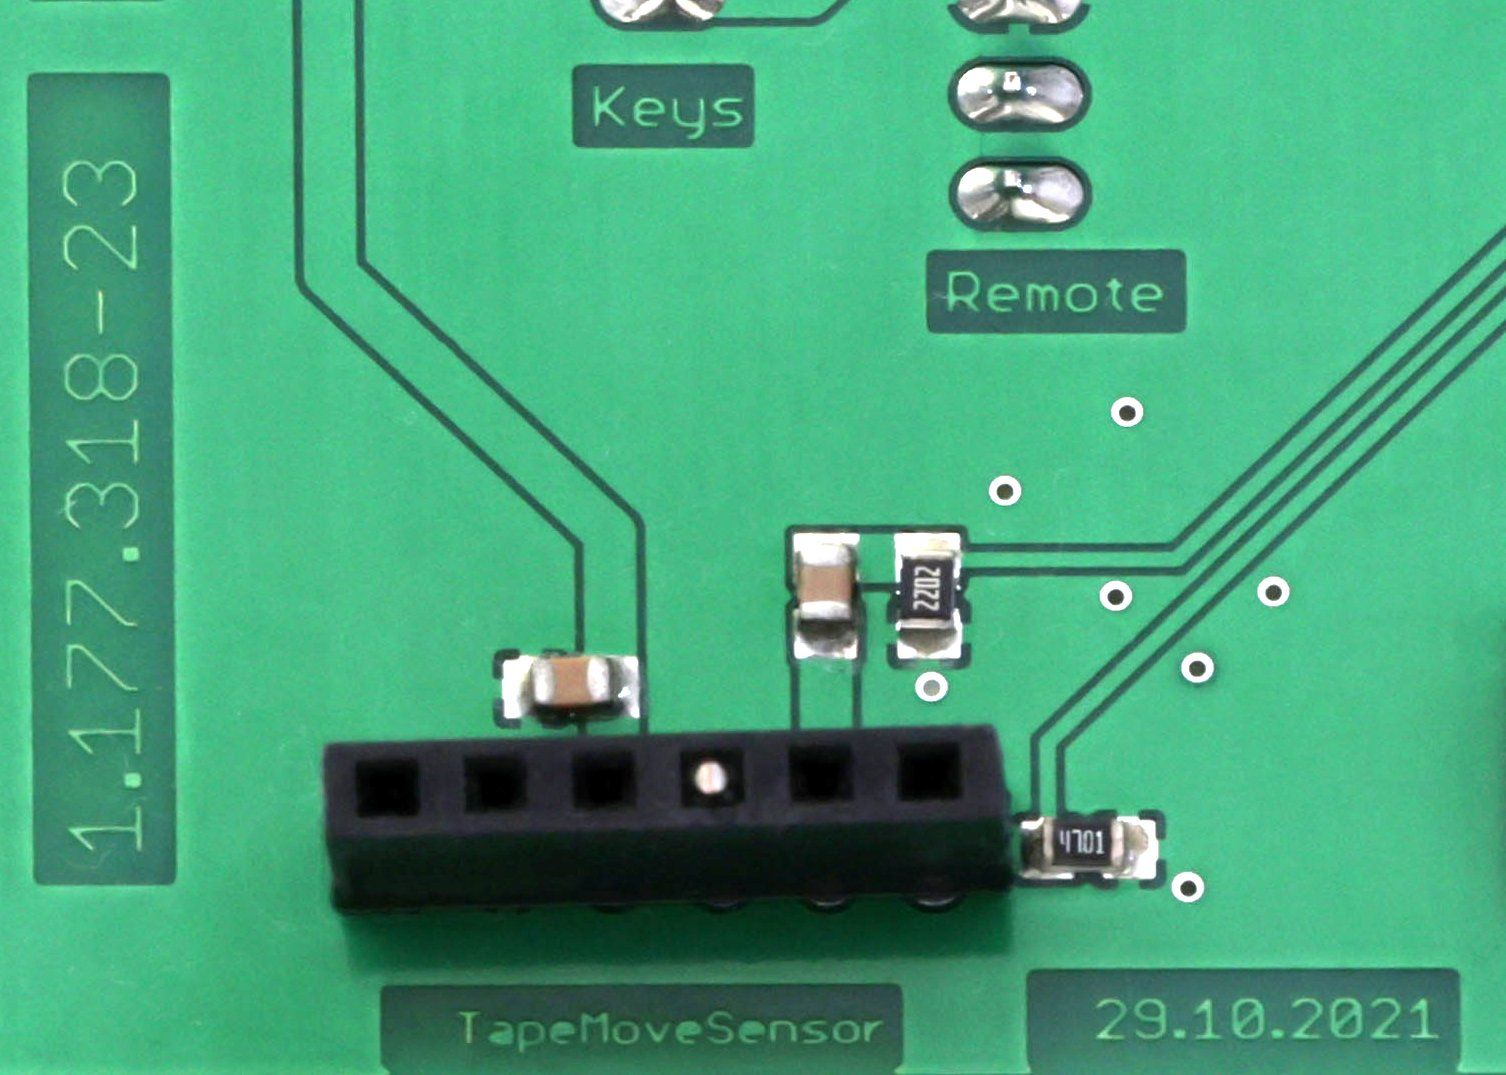 Connections for Tape Move Sensor Revox B77, revox-online